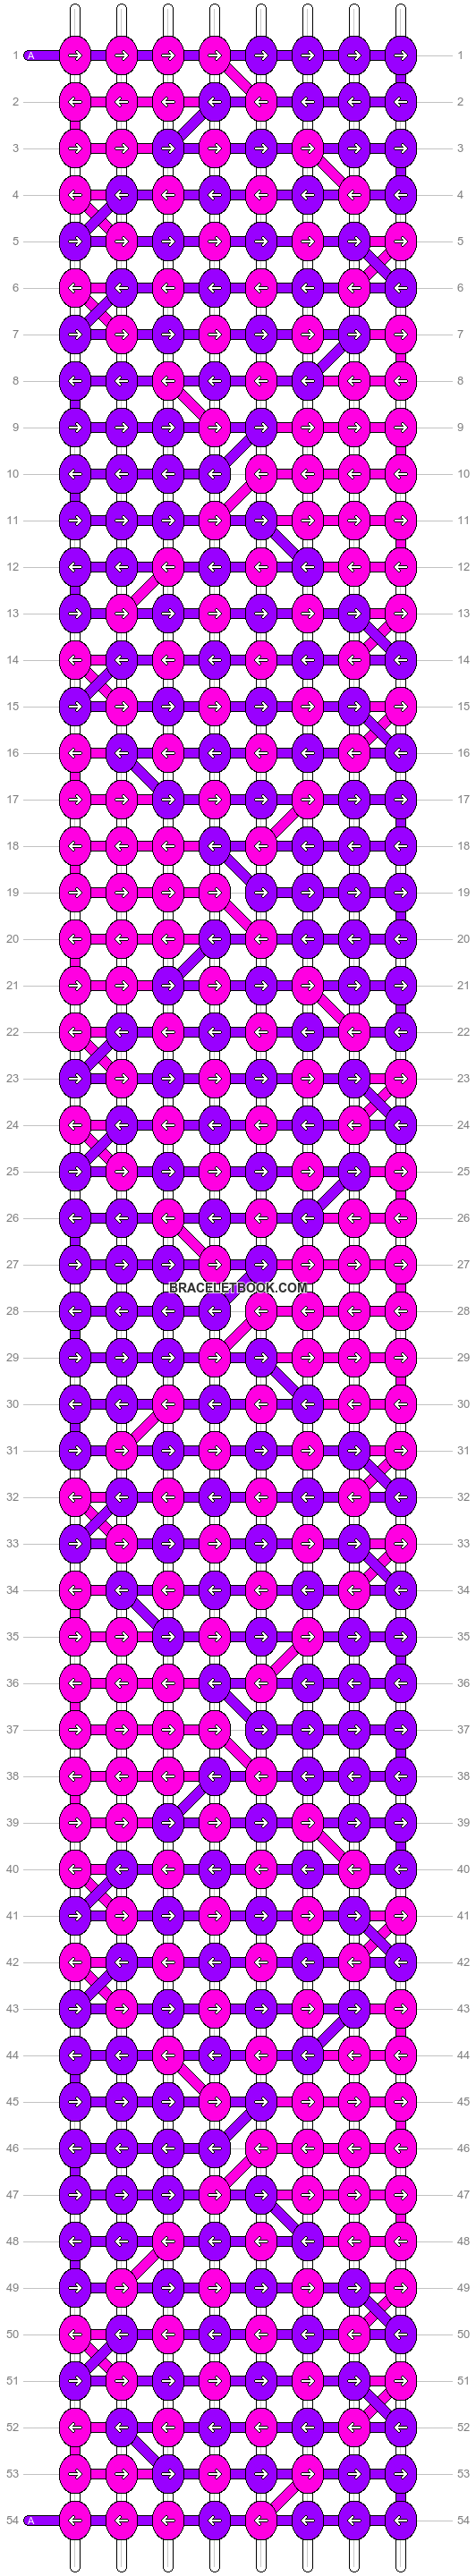 Alpha pattern #29510 variation #17743 pattern